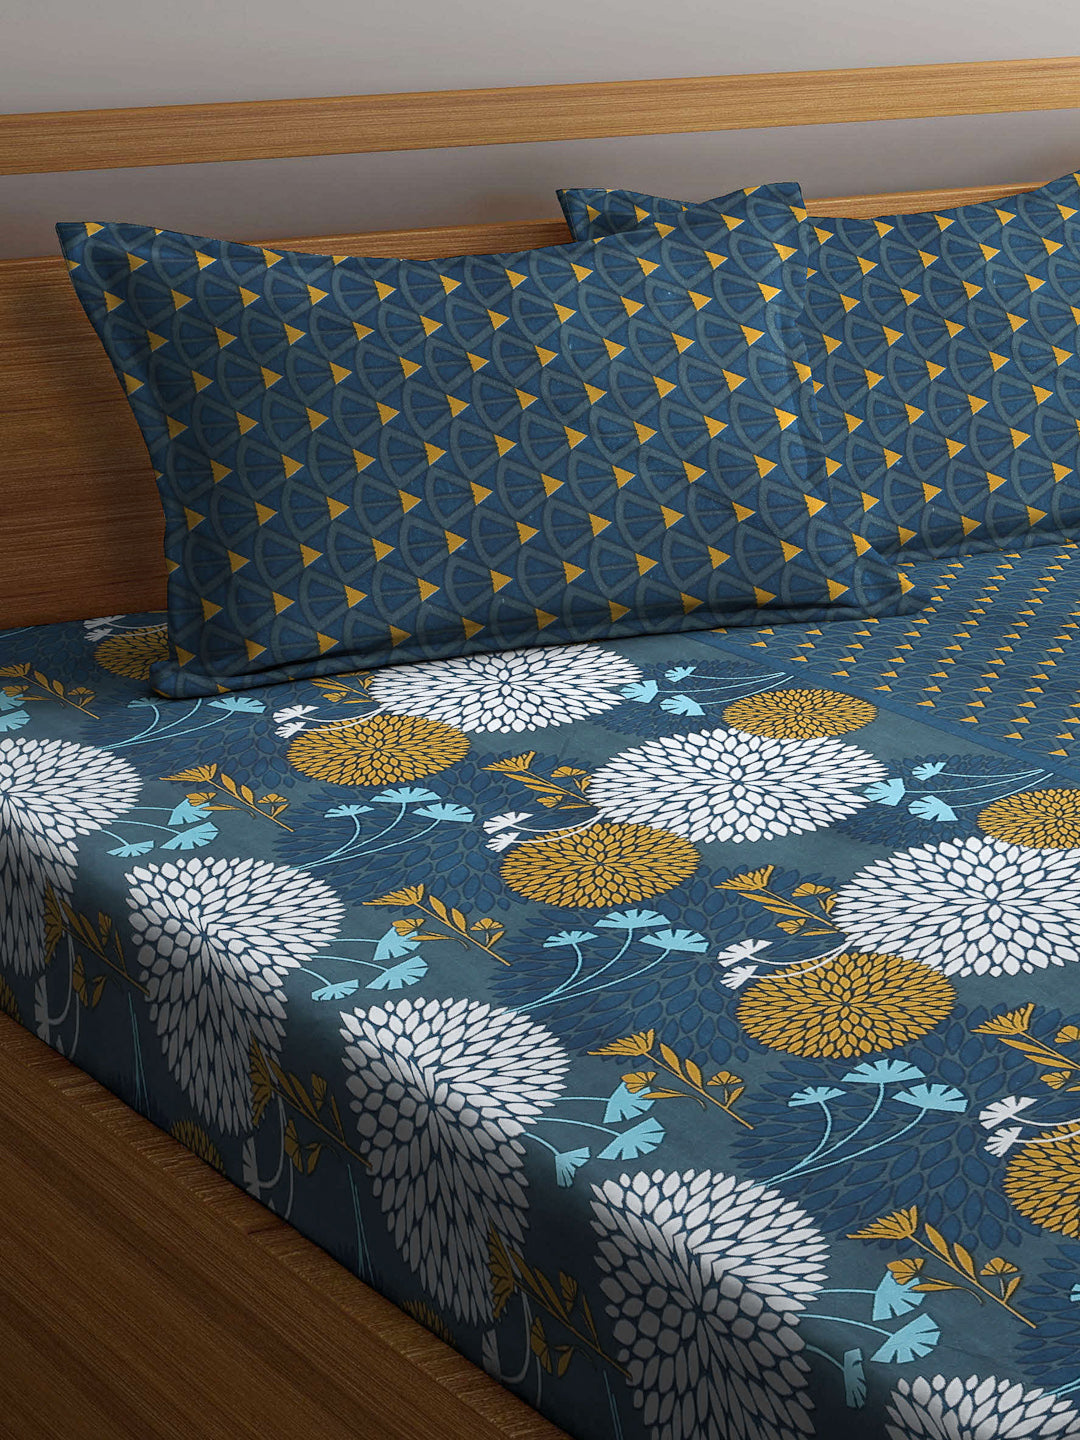 Arrabi Multi Floral TC Cotton Blend Double Size Bedsheet with 2 Pillow Covers